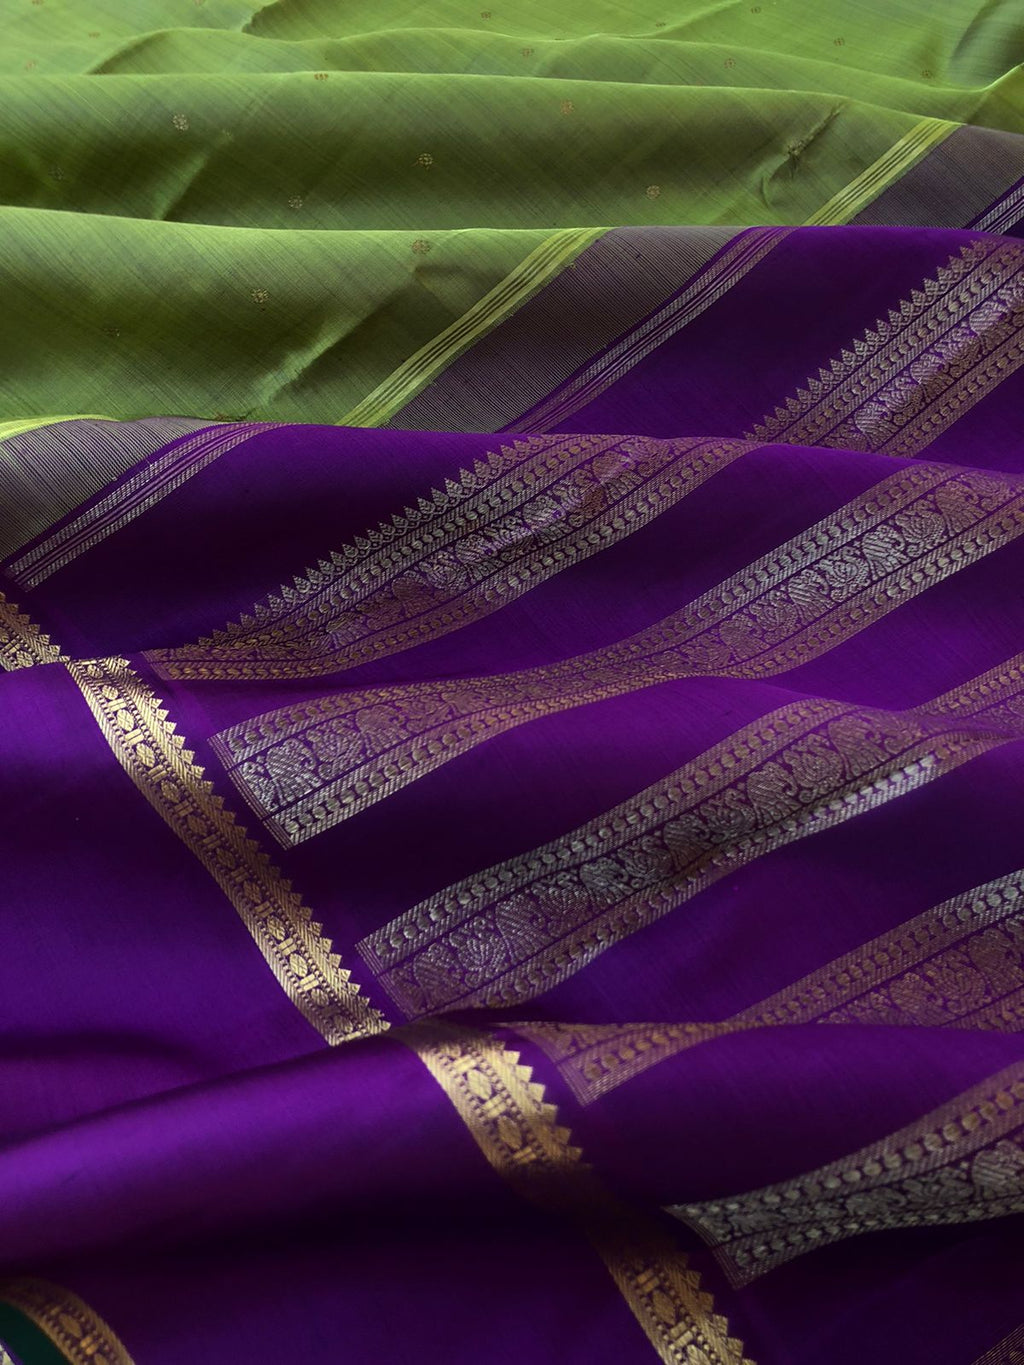 Leela - Limited Edition of Kanchivarams - omg woww combination of algae green with deepest purple pallu and blouse